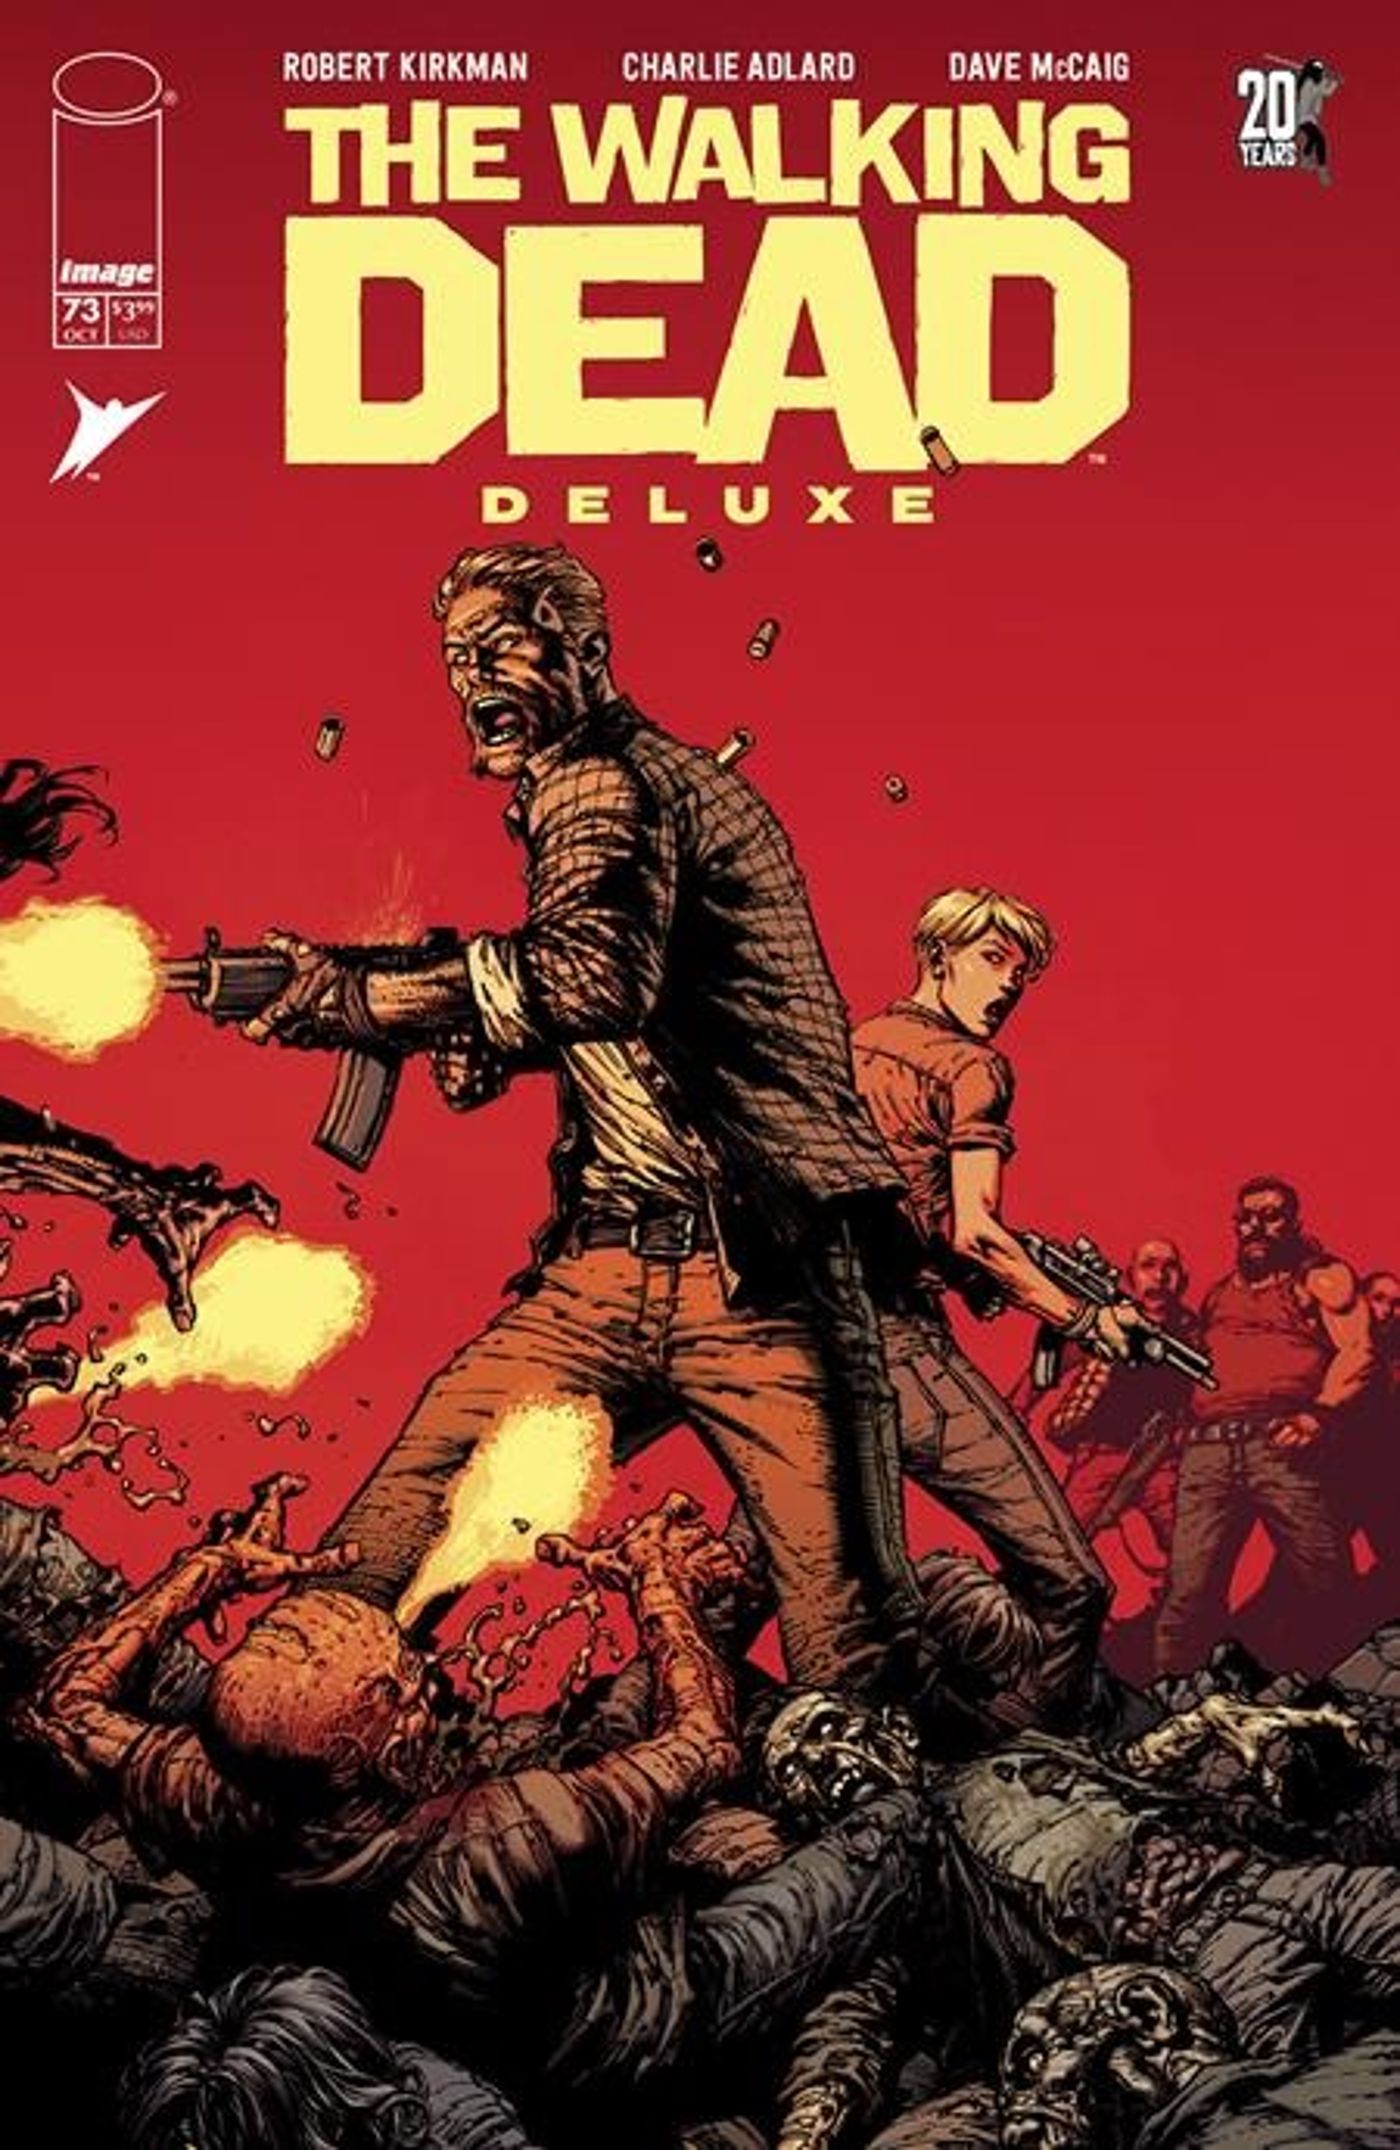 The Walking Dead Deluxe #73 Cover Art